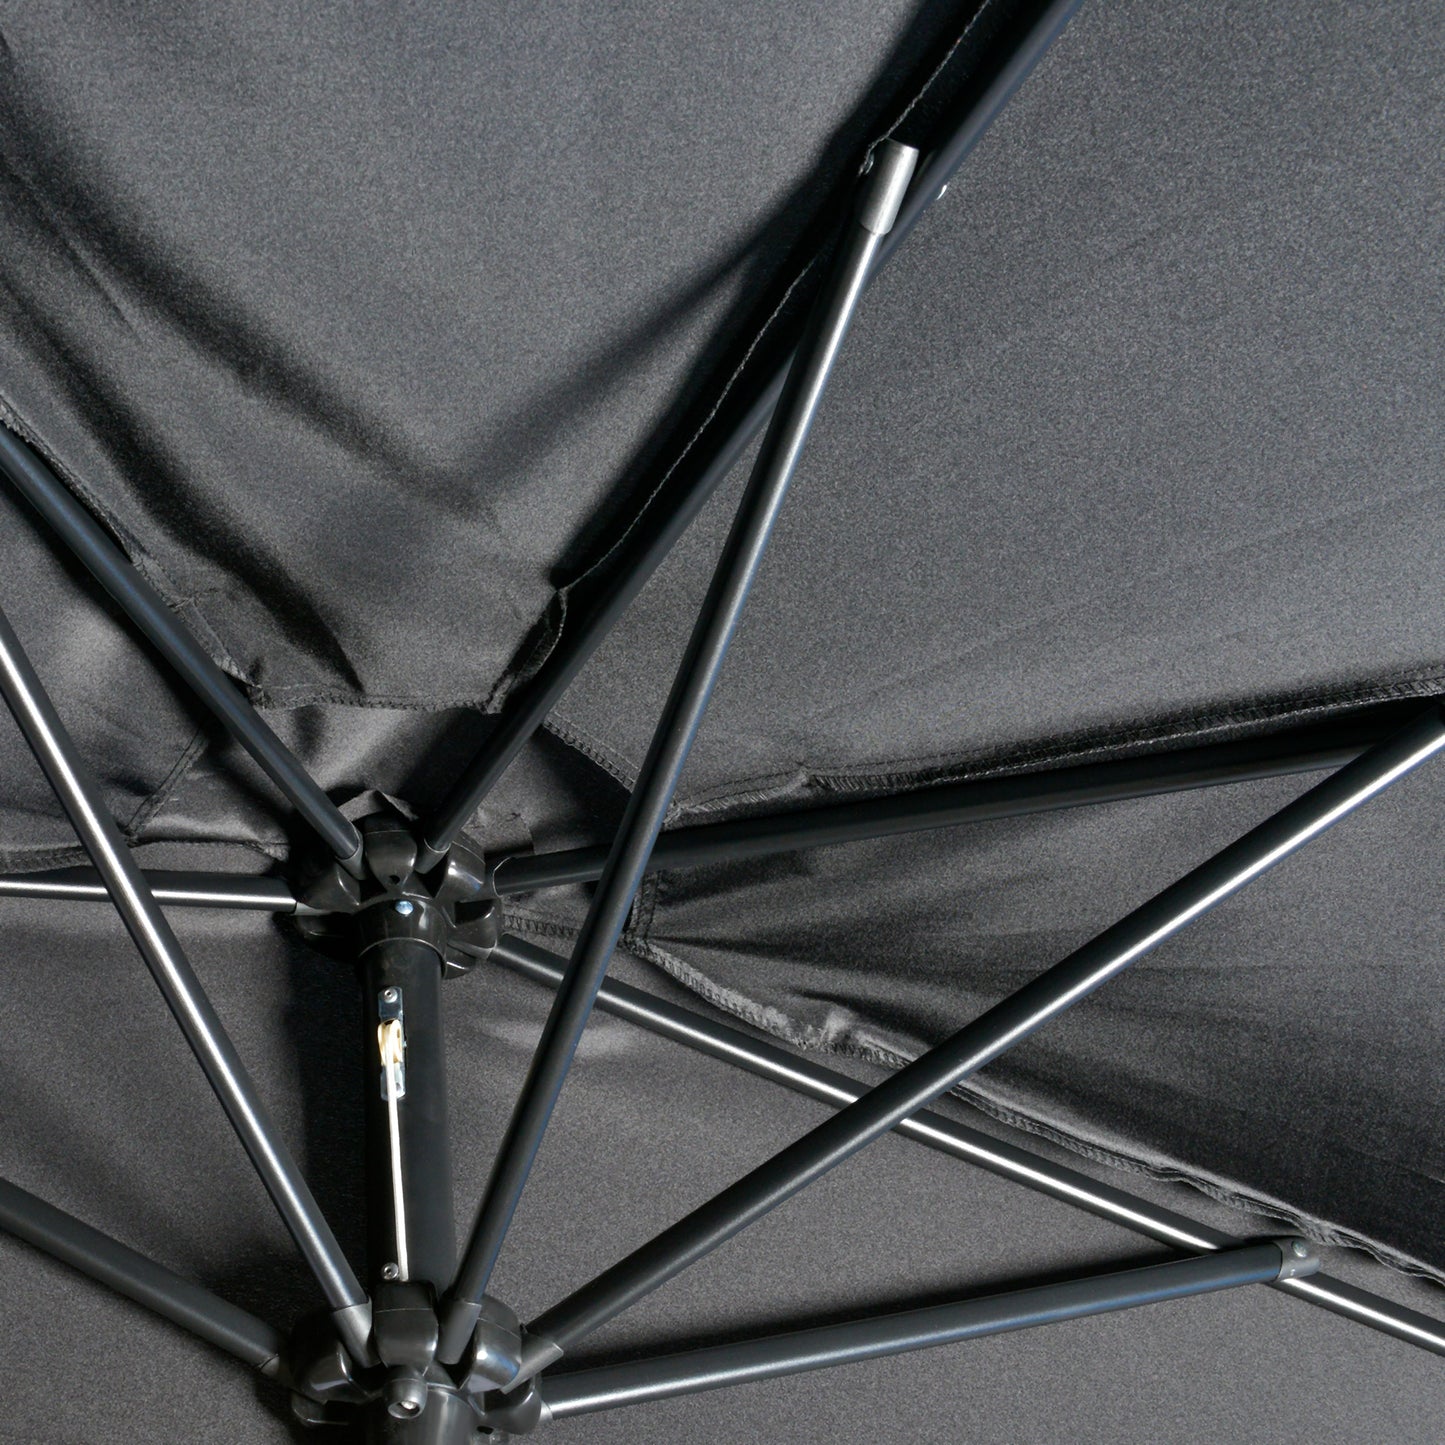 Outsunny Half Parasol, 3m Semi-Round Umbrella for Balcony, Metal Frame with Crank Handle, Black